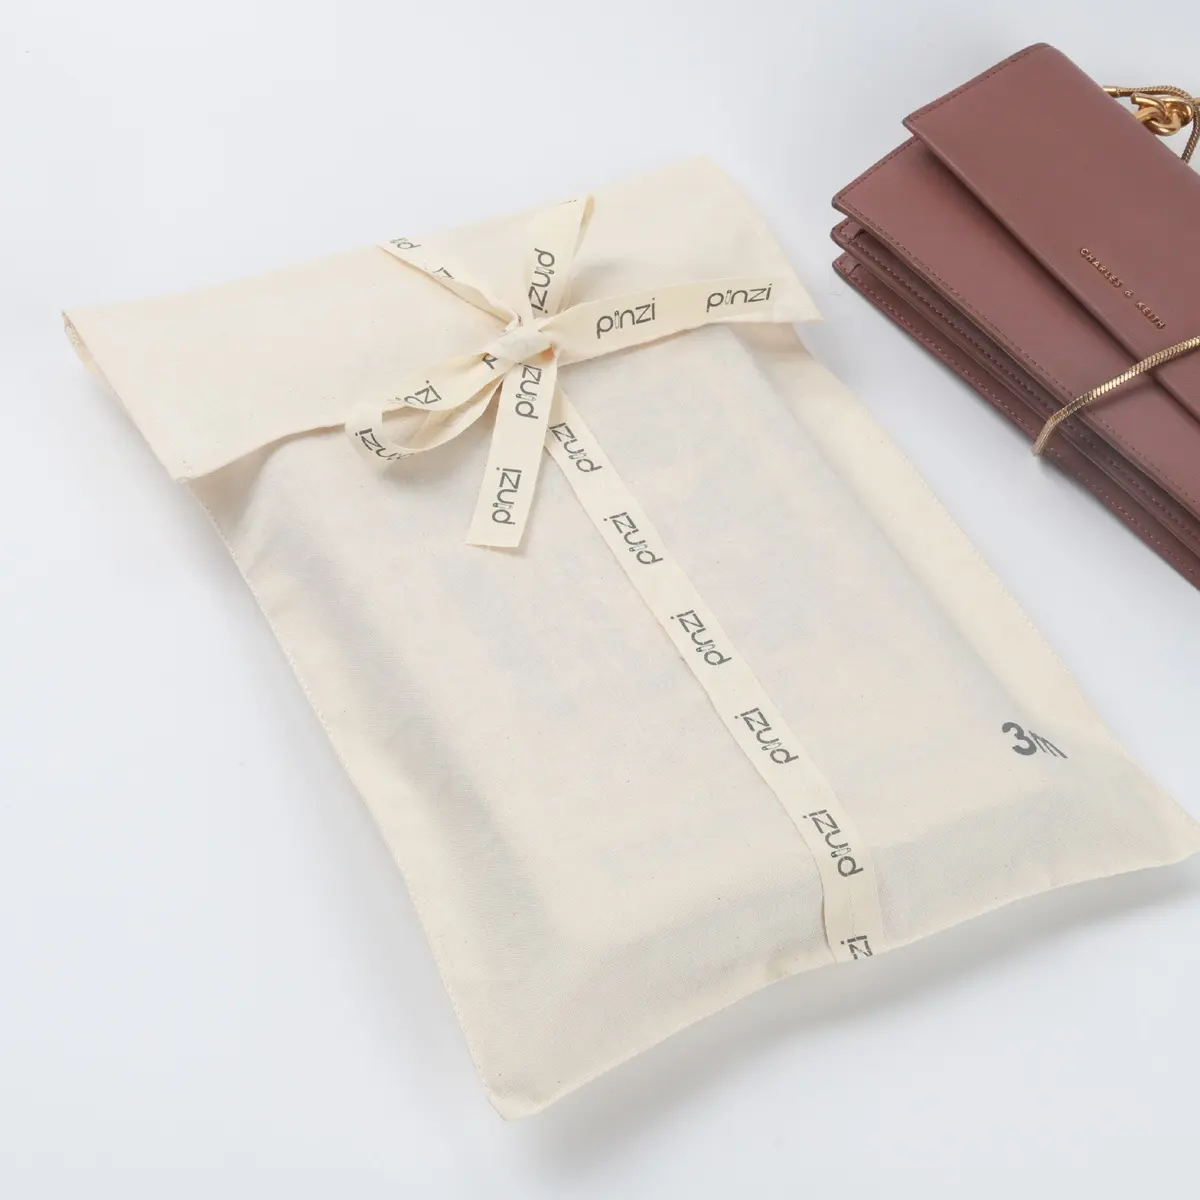 Beauty Cotton Canvas Envelope Dust Pillow Pouch Underwear Shoe Packing Bag With Flap